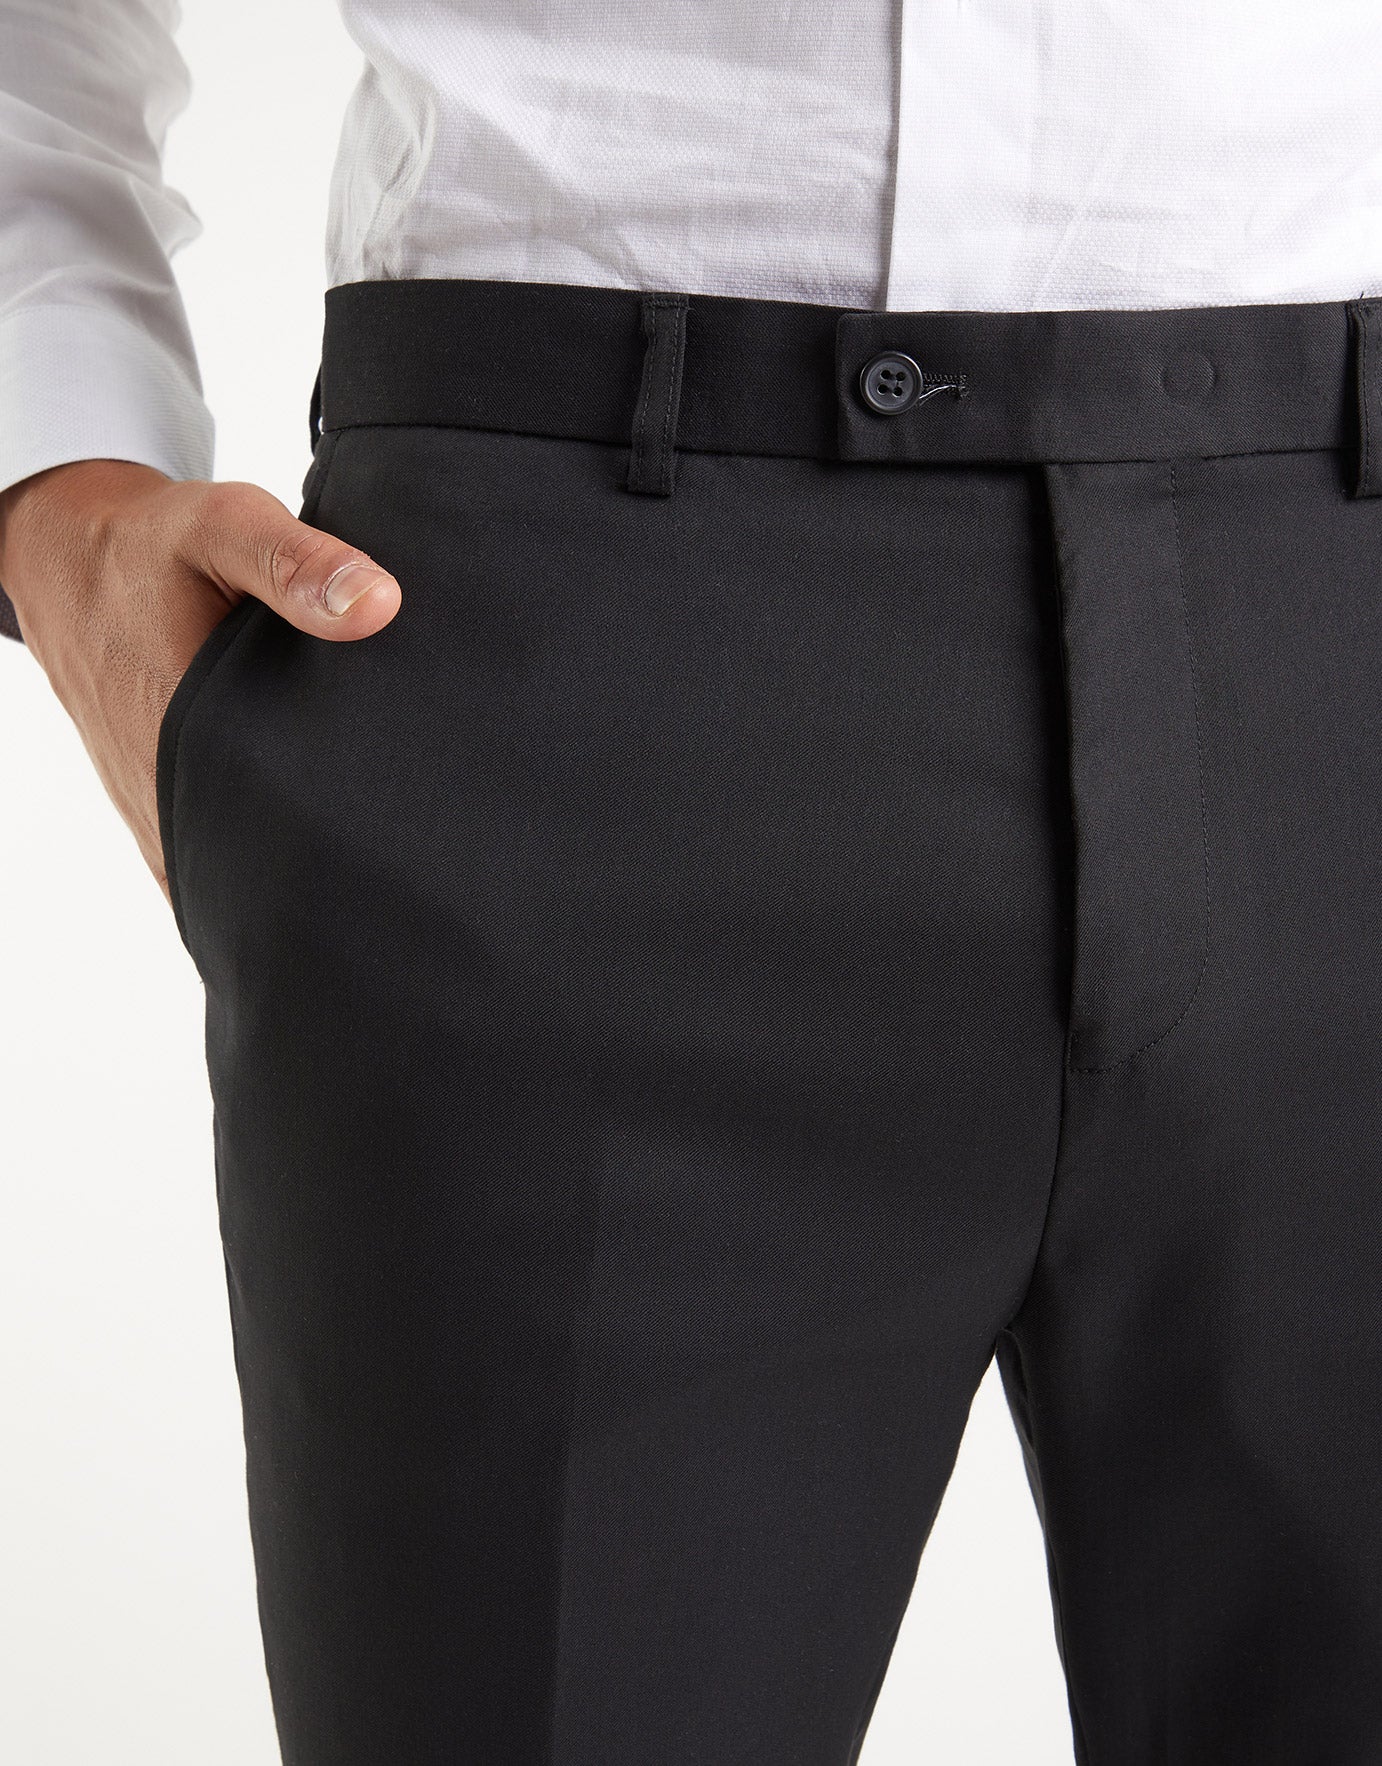 Topman skinny suit trousers in black - ShopStyle